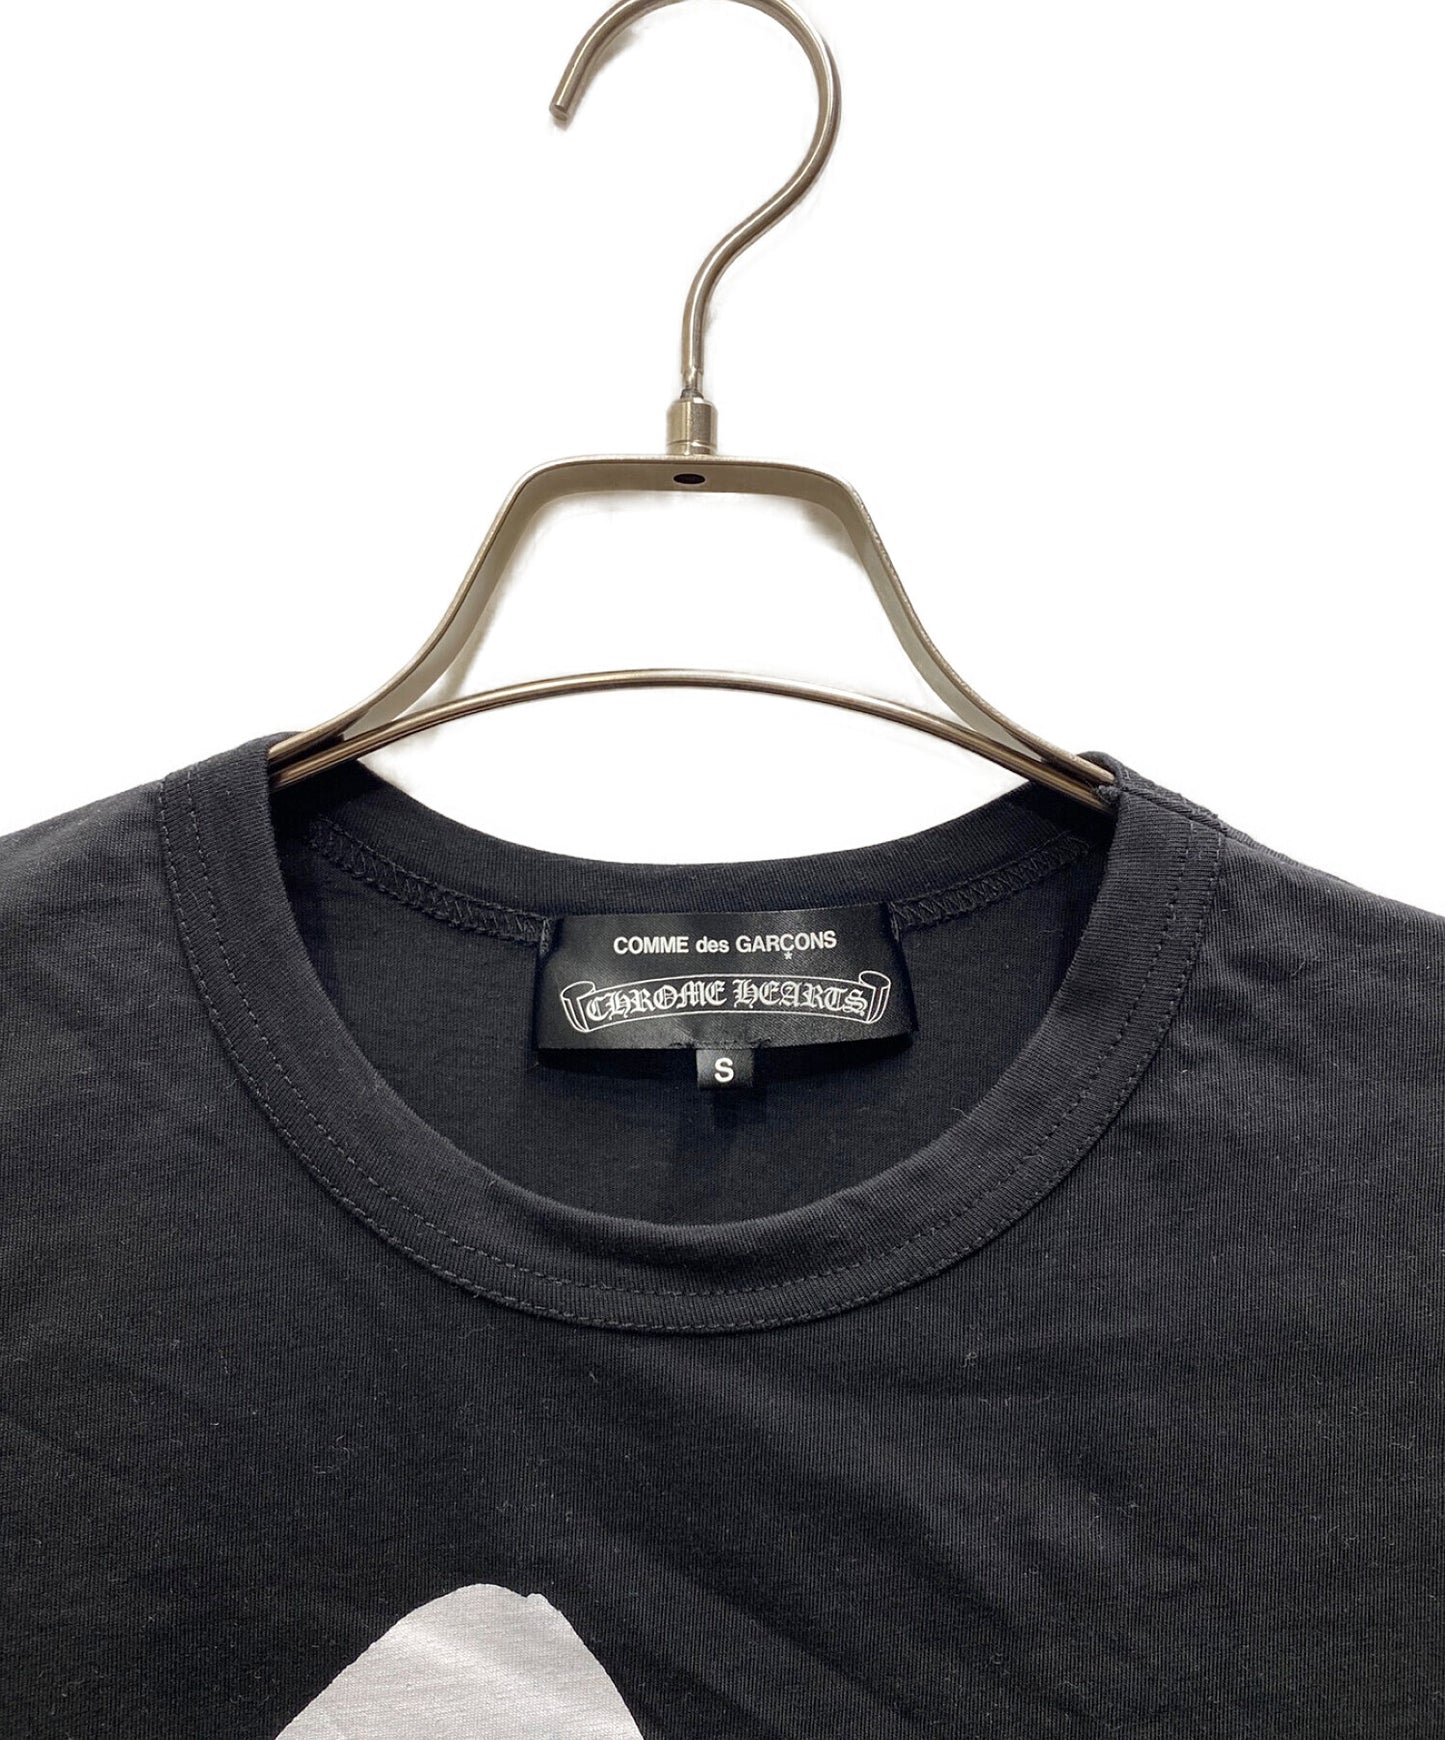 Comme des Garcons Dover Street Market Limited Collaboration T-Shirt ZI-T002-001